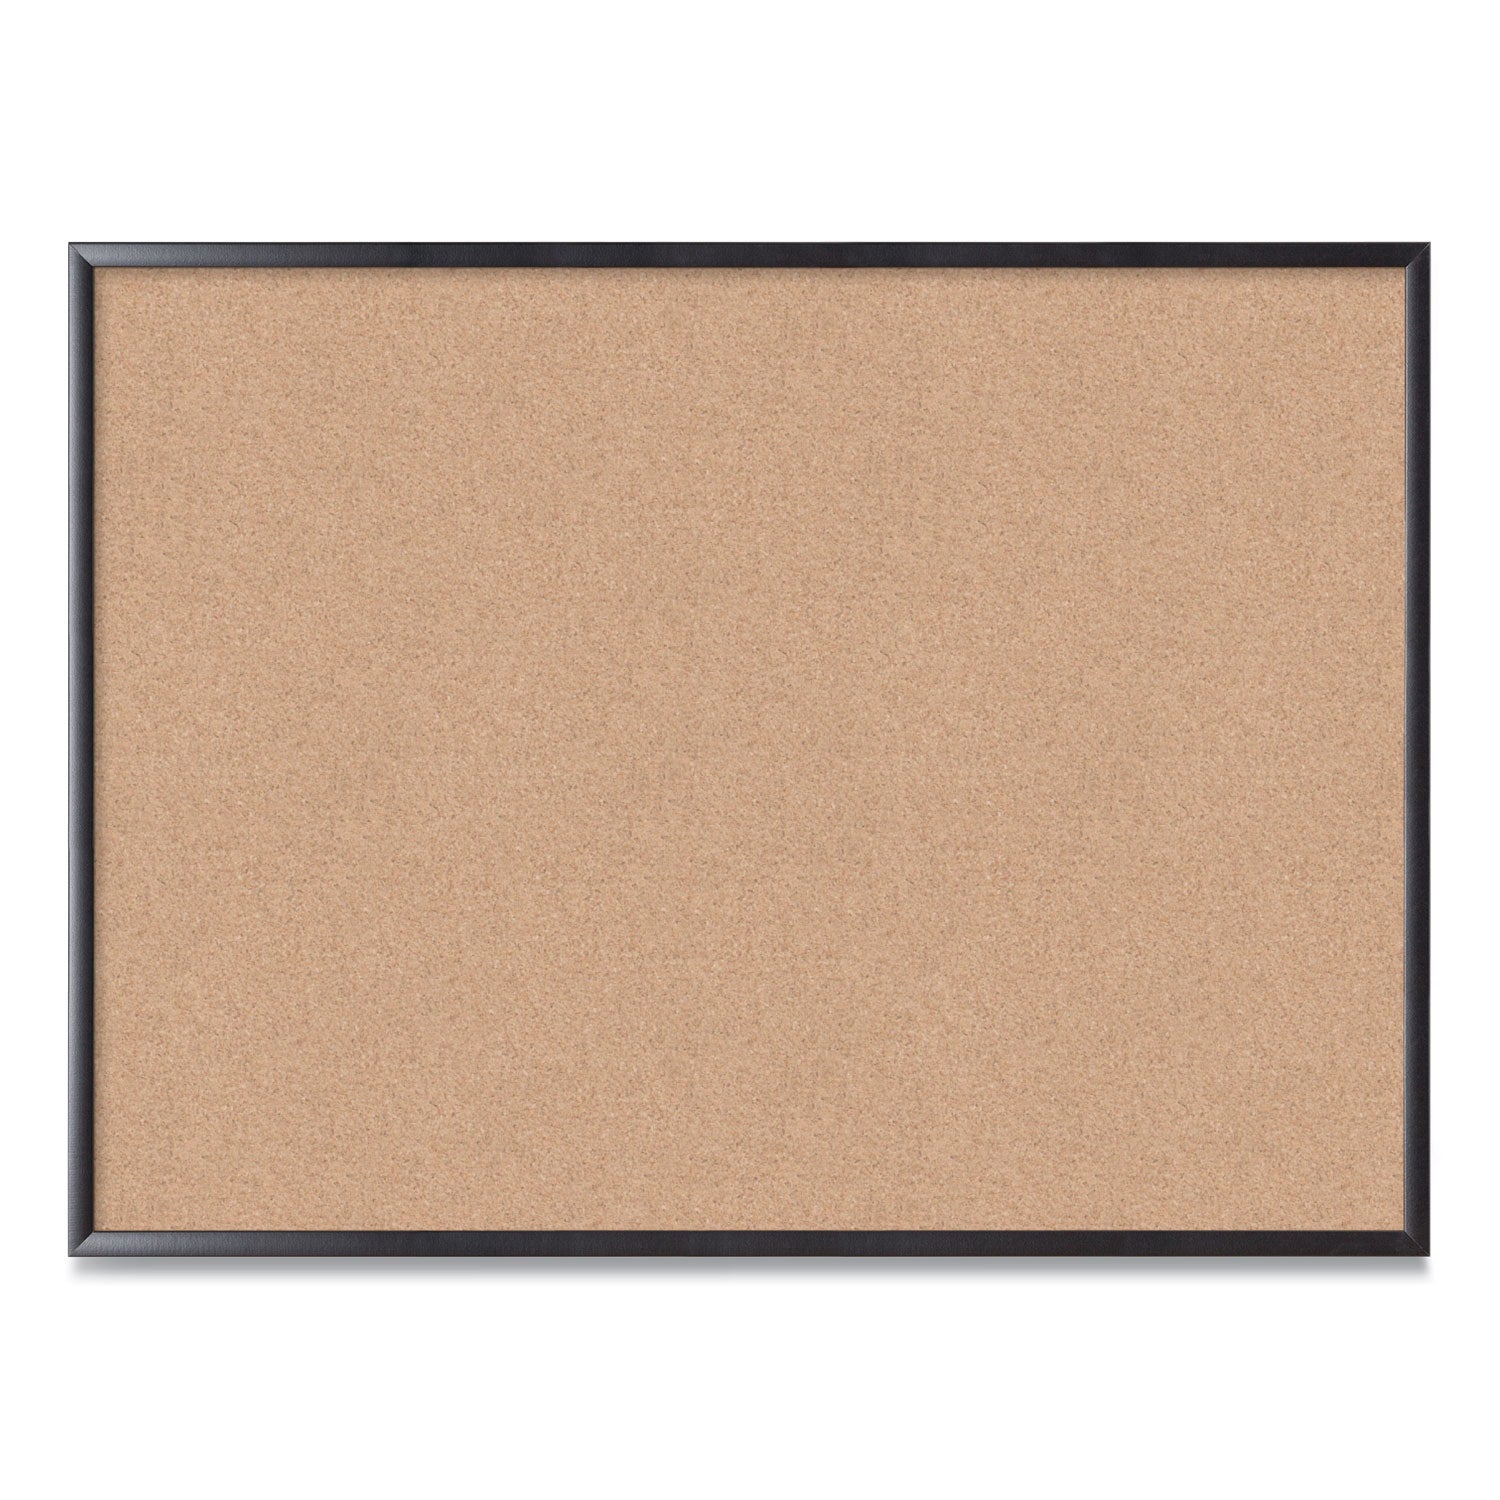 cork-bulletin-board-47-x-35-tan-surface-black-frame_ubr2876u0001 - 1